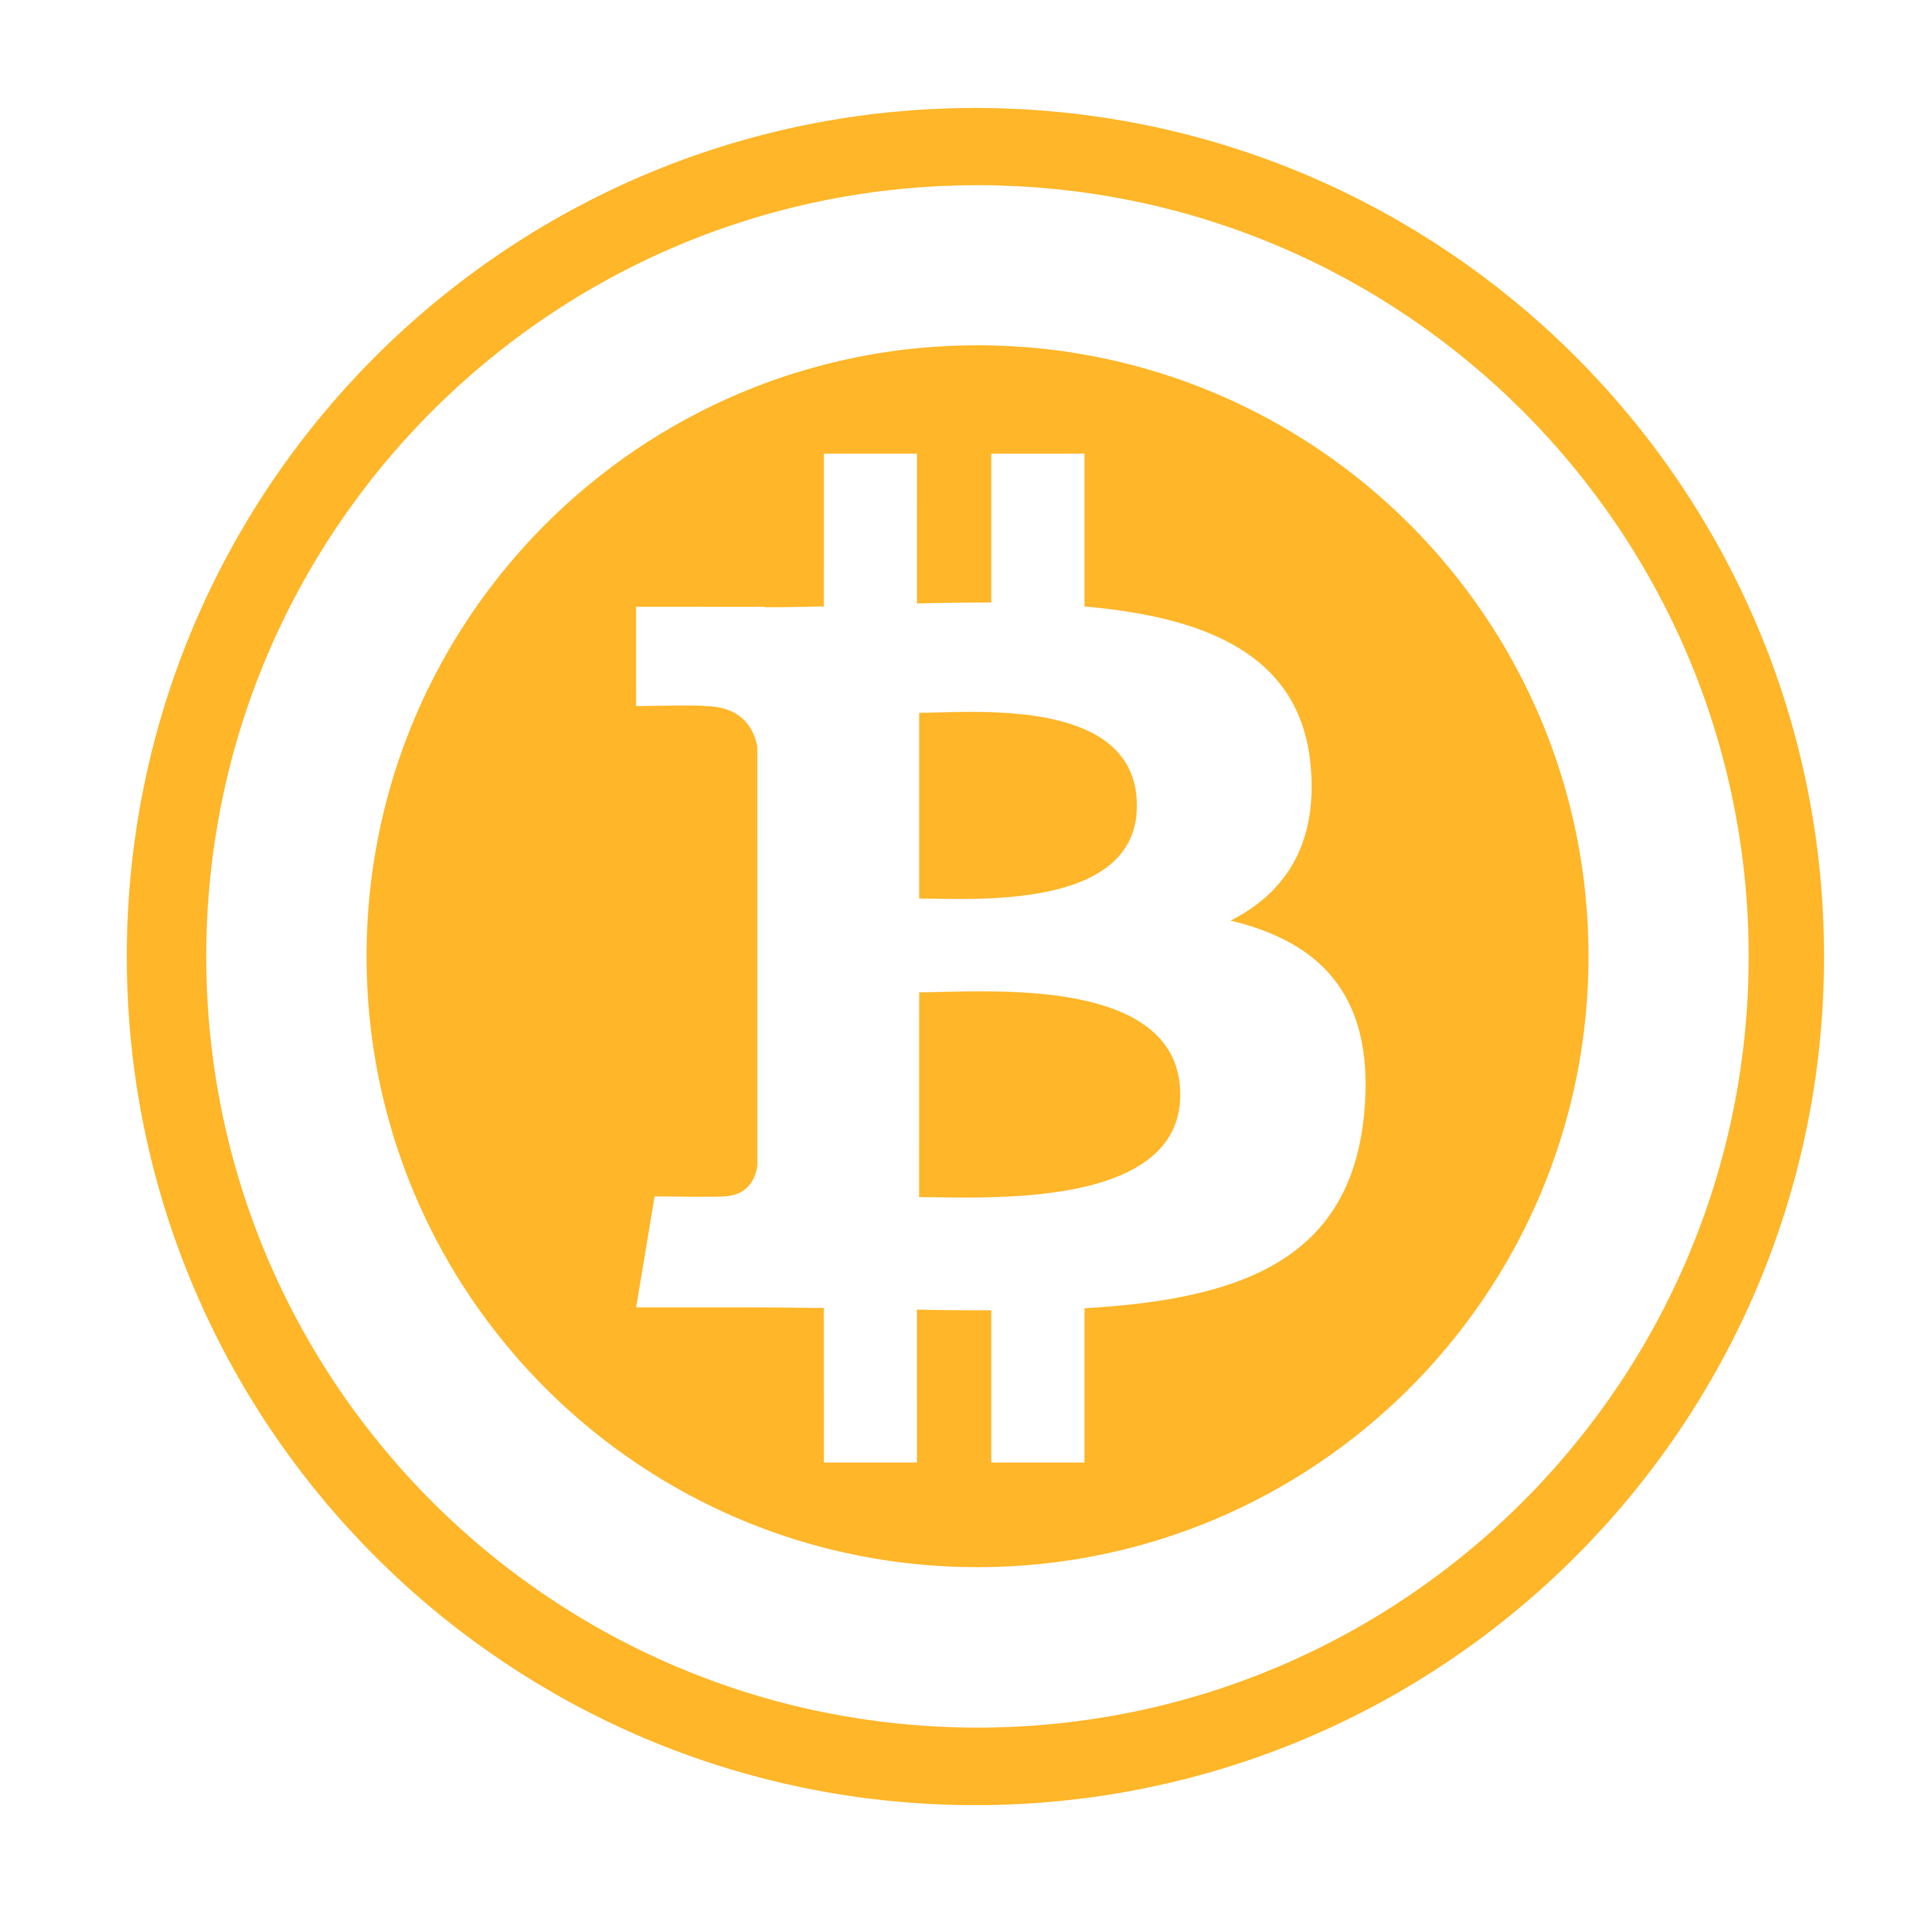 Official Bitcoin Logo - Where can I find this Bitcoin logo as a transparent PNG? : Bitcoin